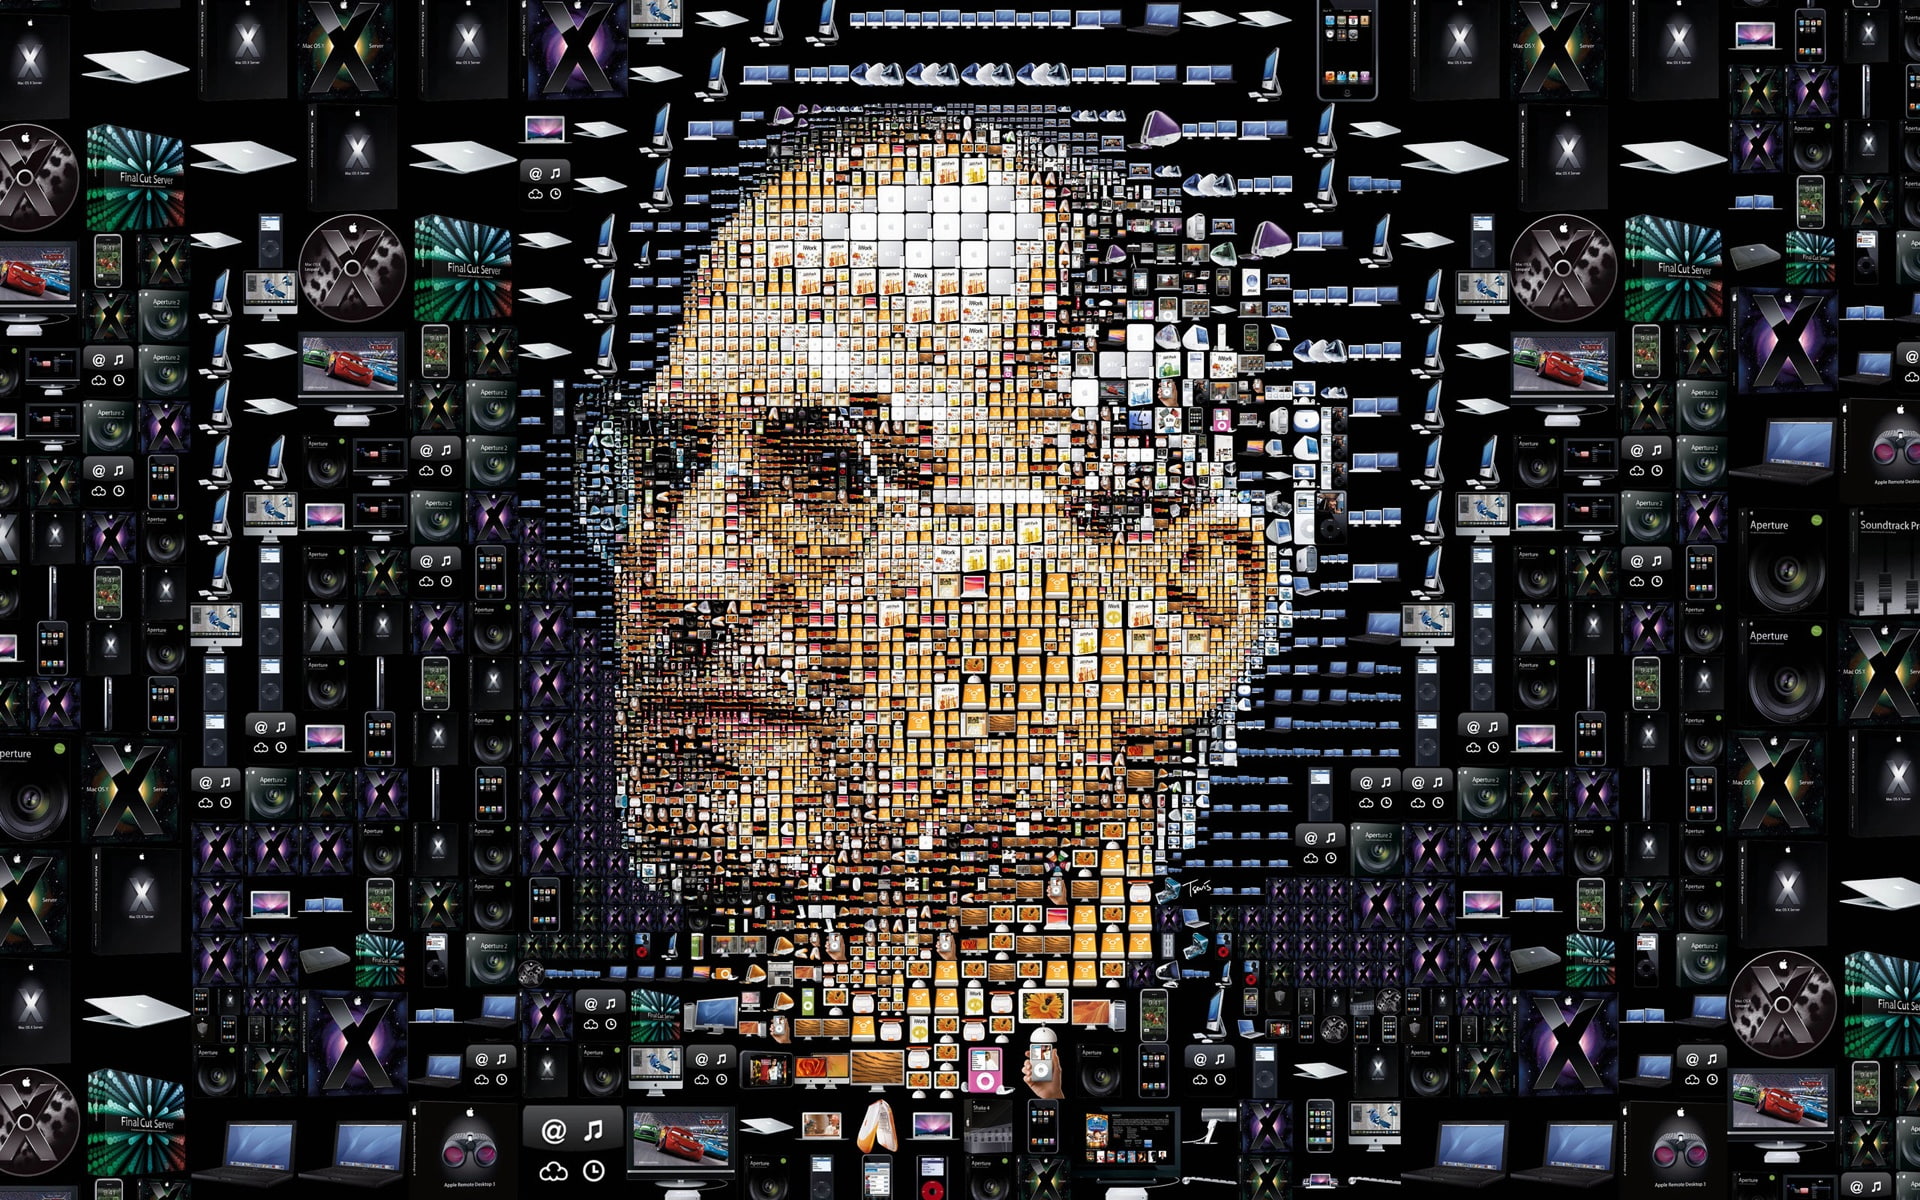 Steve Jobs Commemorative